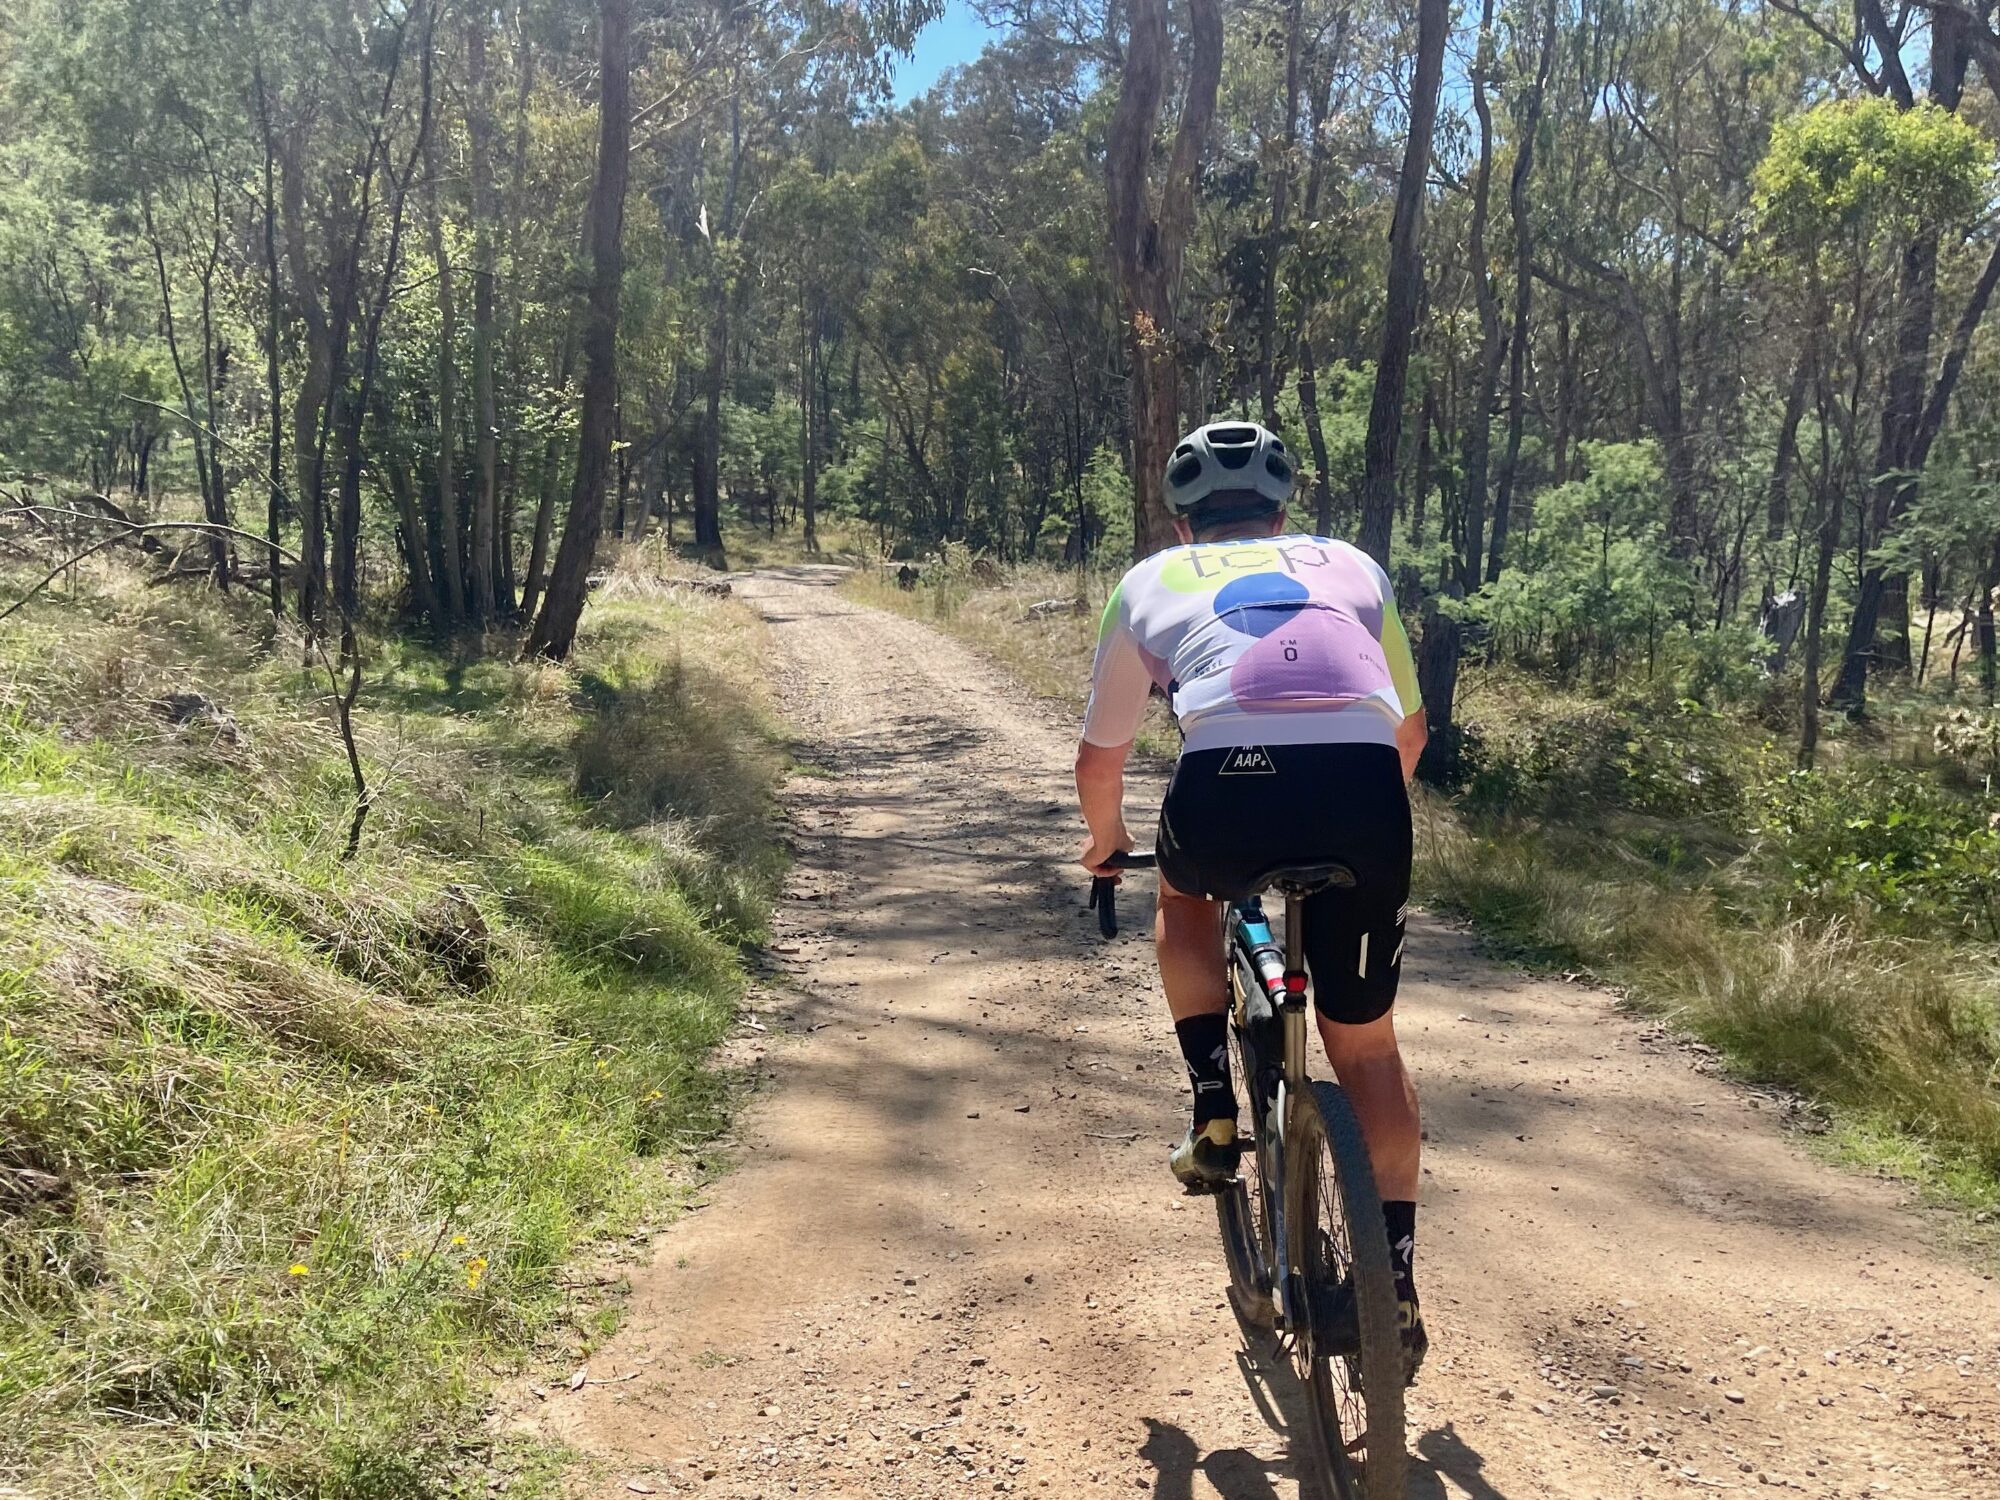 Cyclist riding dirt road through native bushland on a sunny day